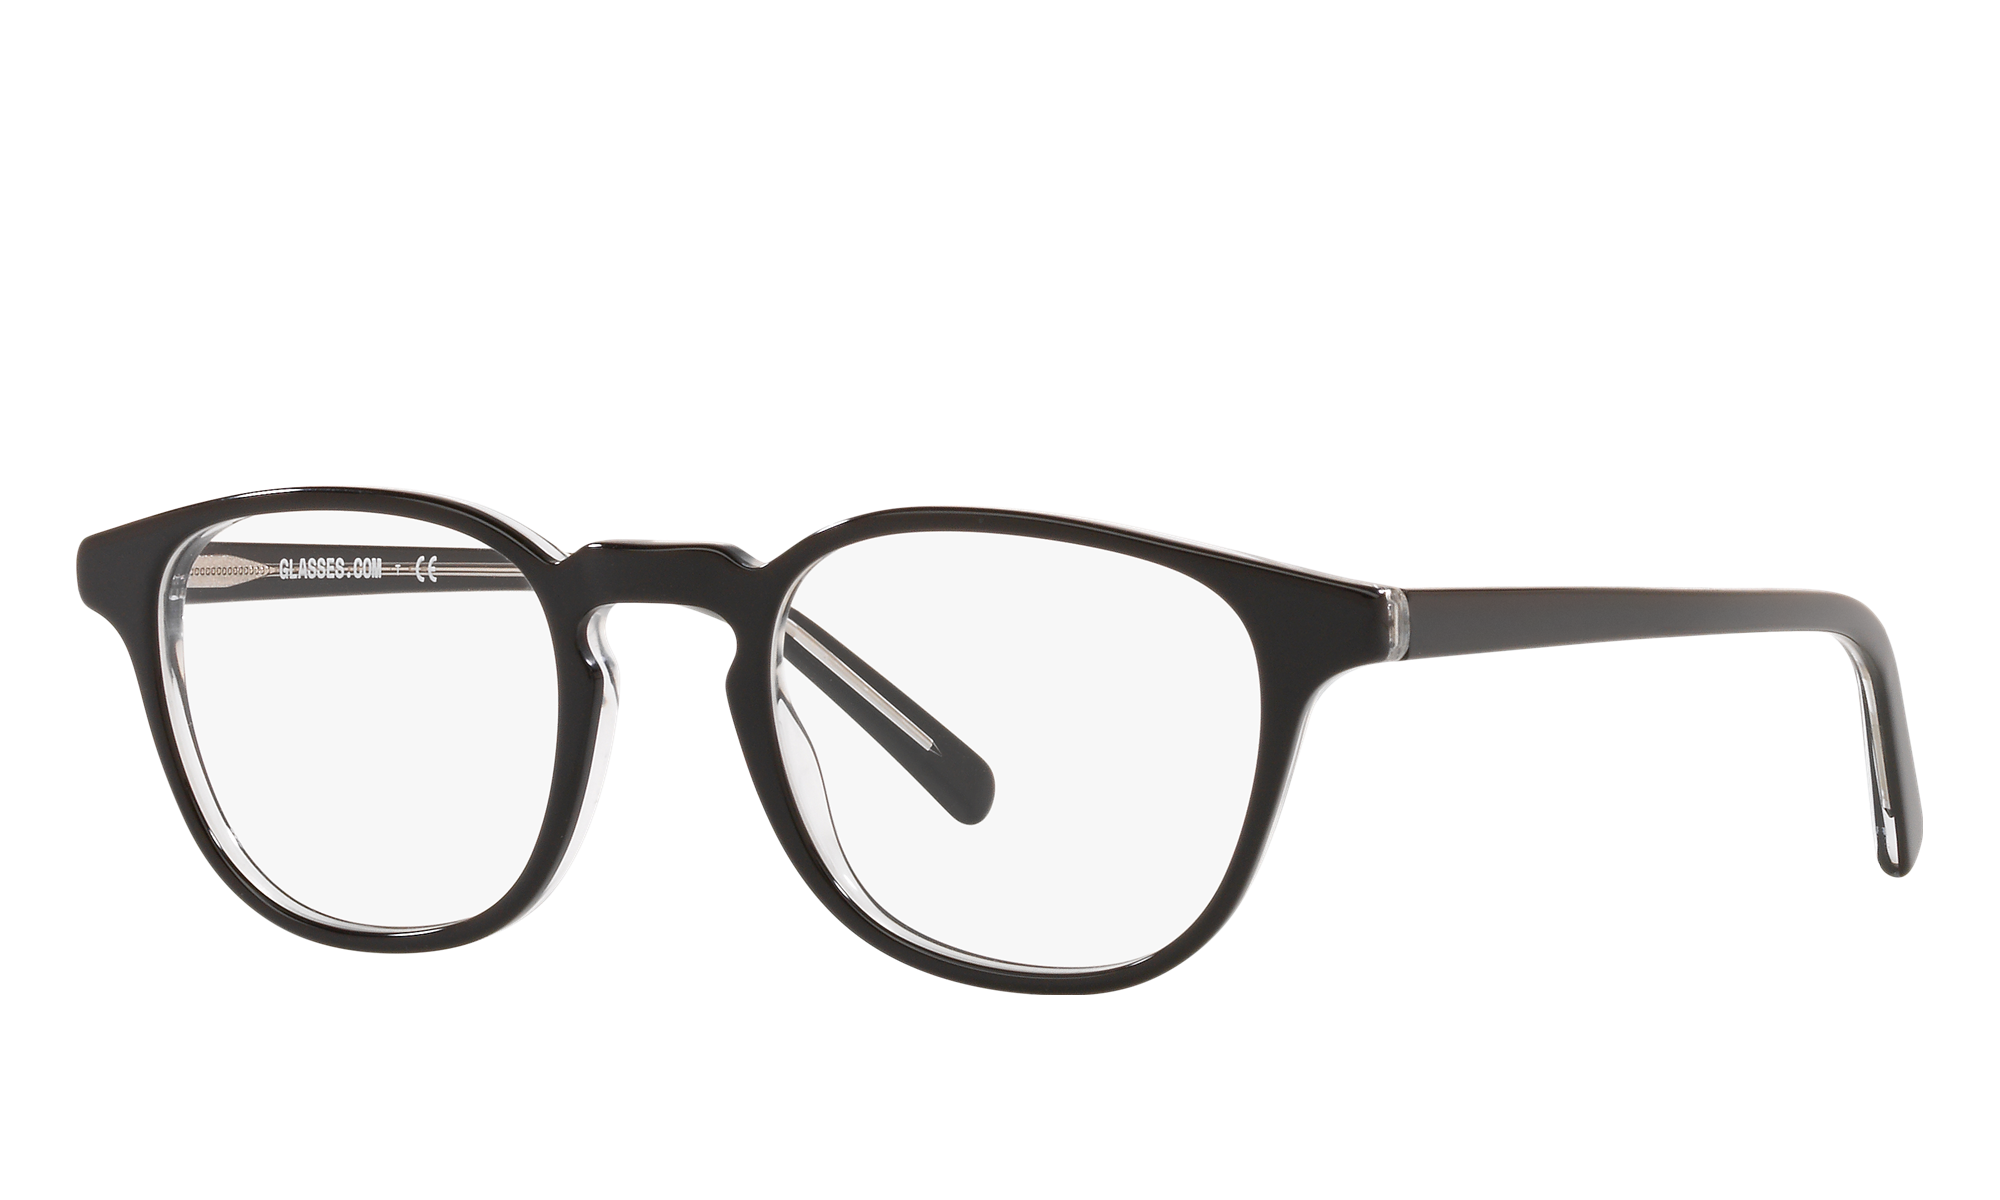 Glasses.com Unisex Gk2004 Shiny Top Black On Transparent Size: Standard